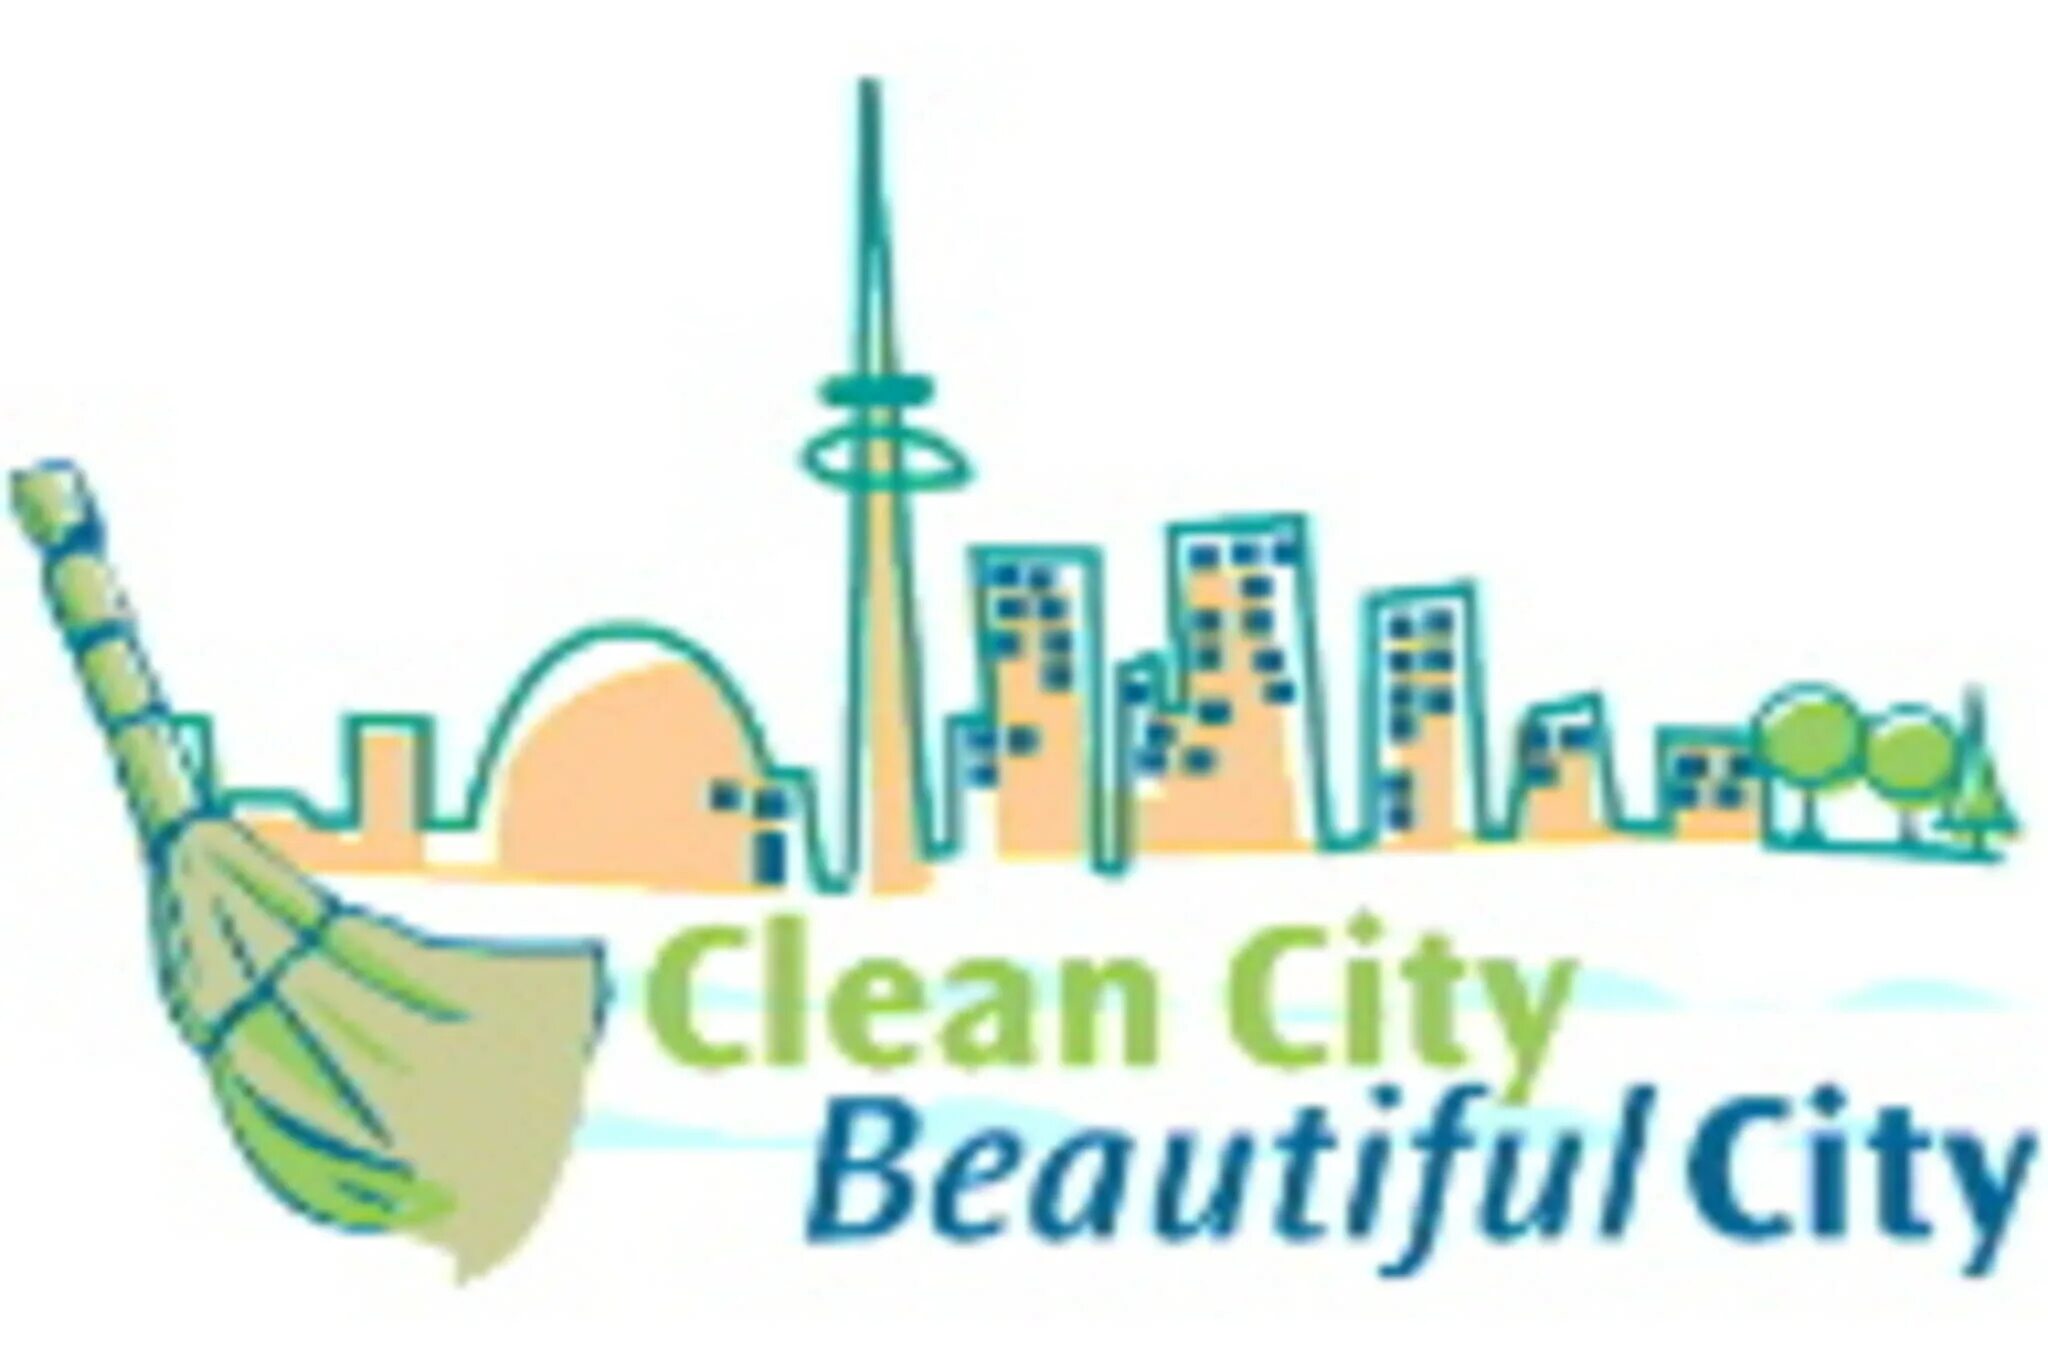 Cleancity uz. Clean City. Логотипы Cleancity. Надпись beautiful City. Green City логотип.